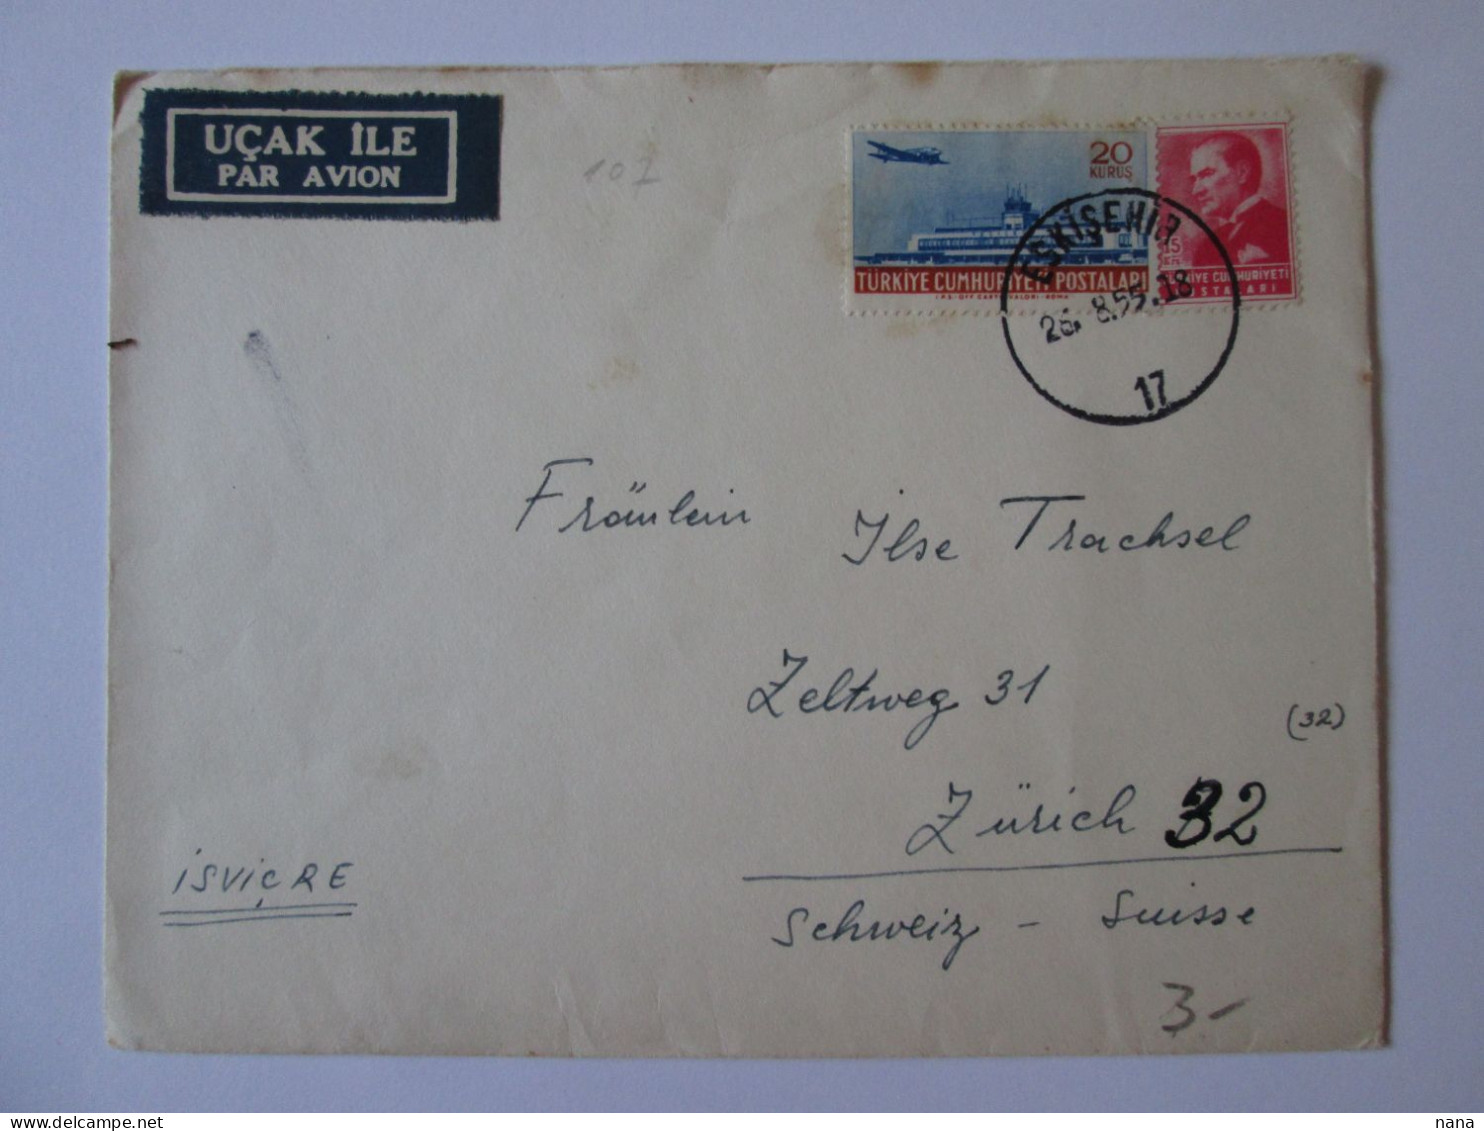 Turquie/Turkey-Eskișehir Enveloppe Recommandee Par Avion 1955/Registered Cover Air Mail 1955 - Covers & Documents